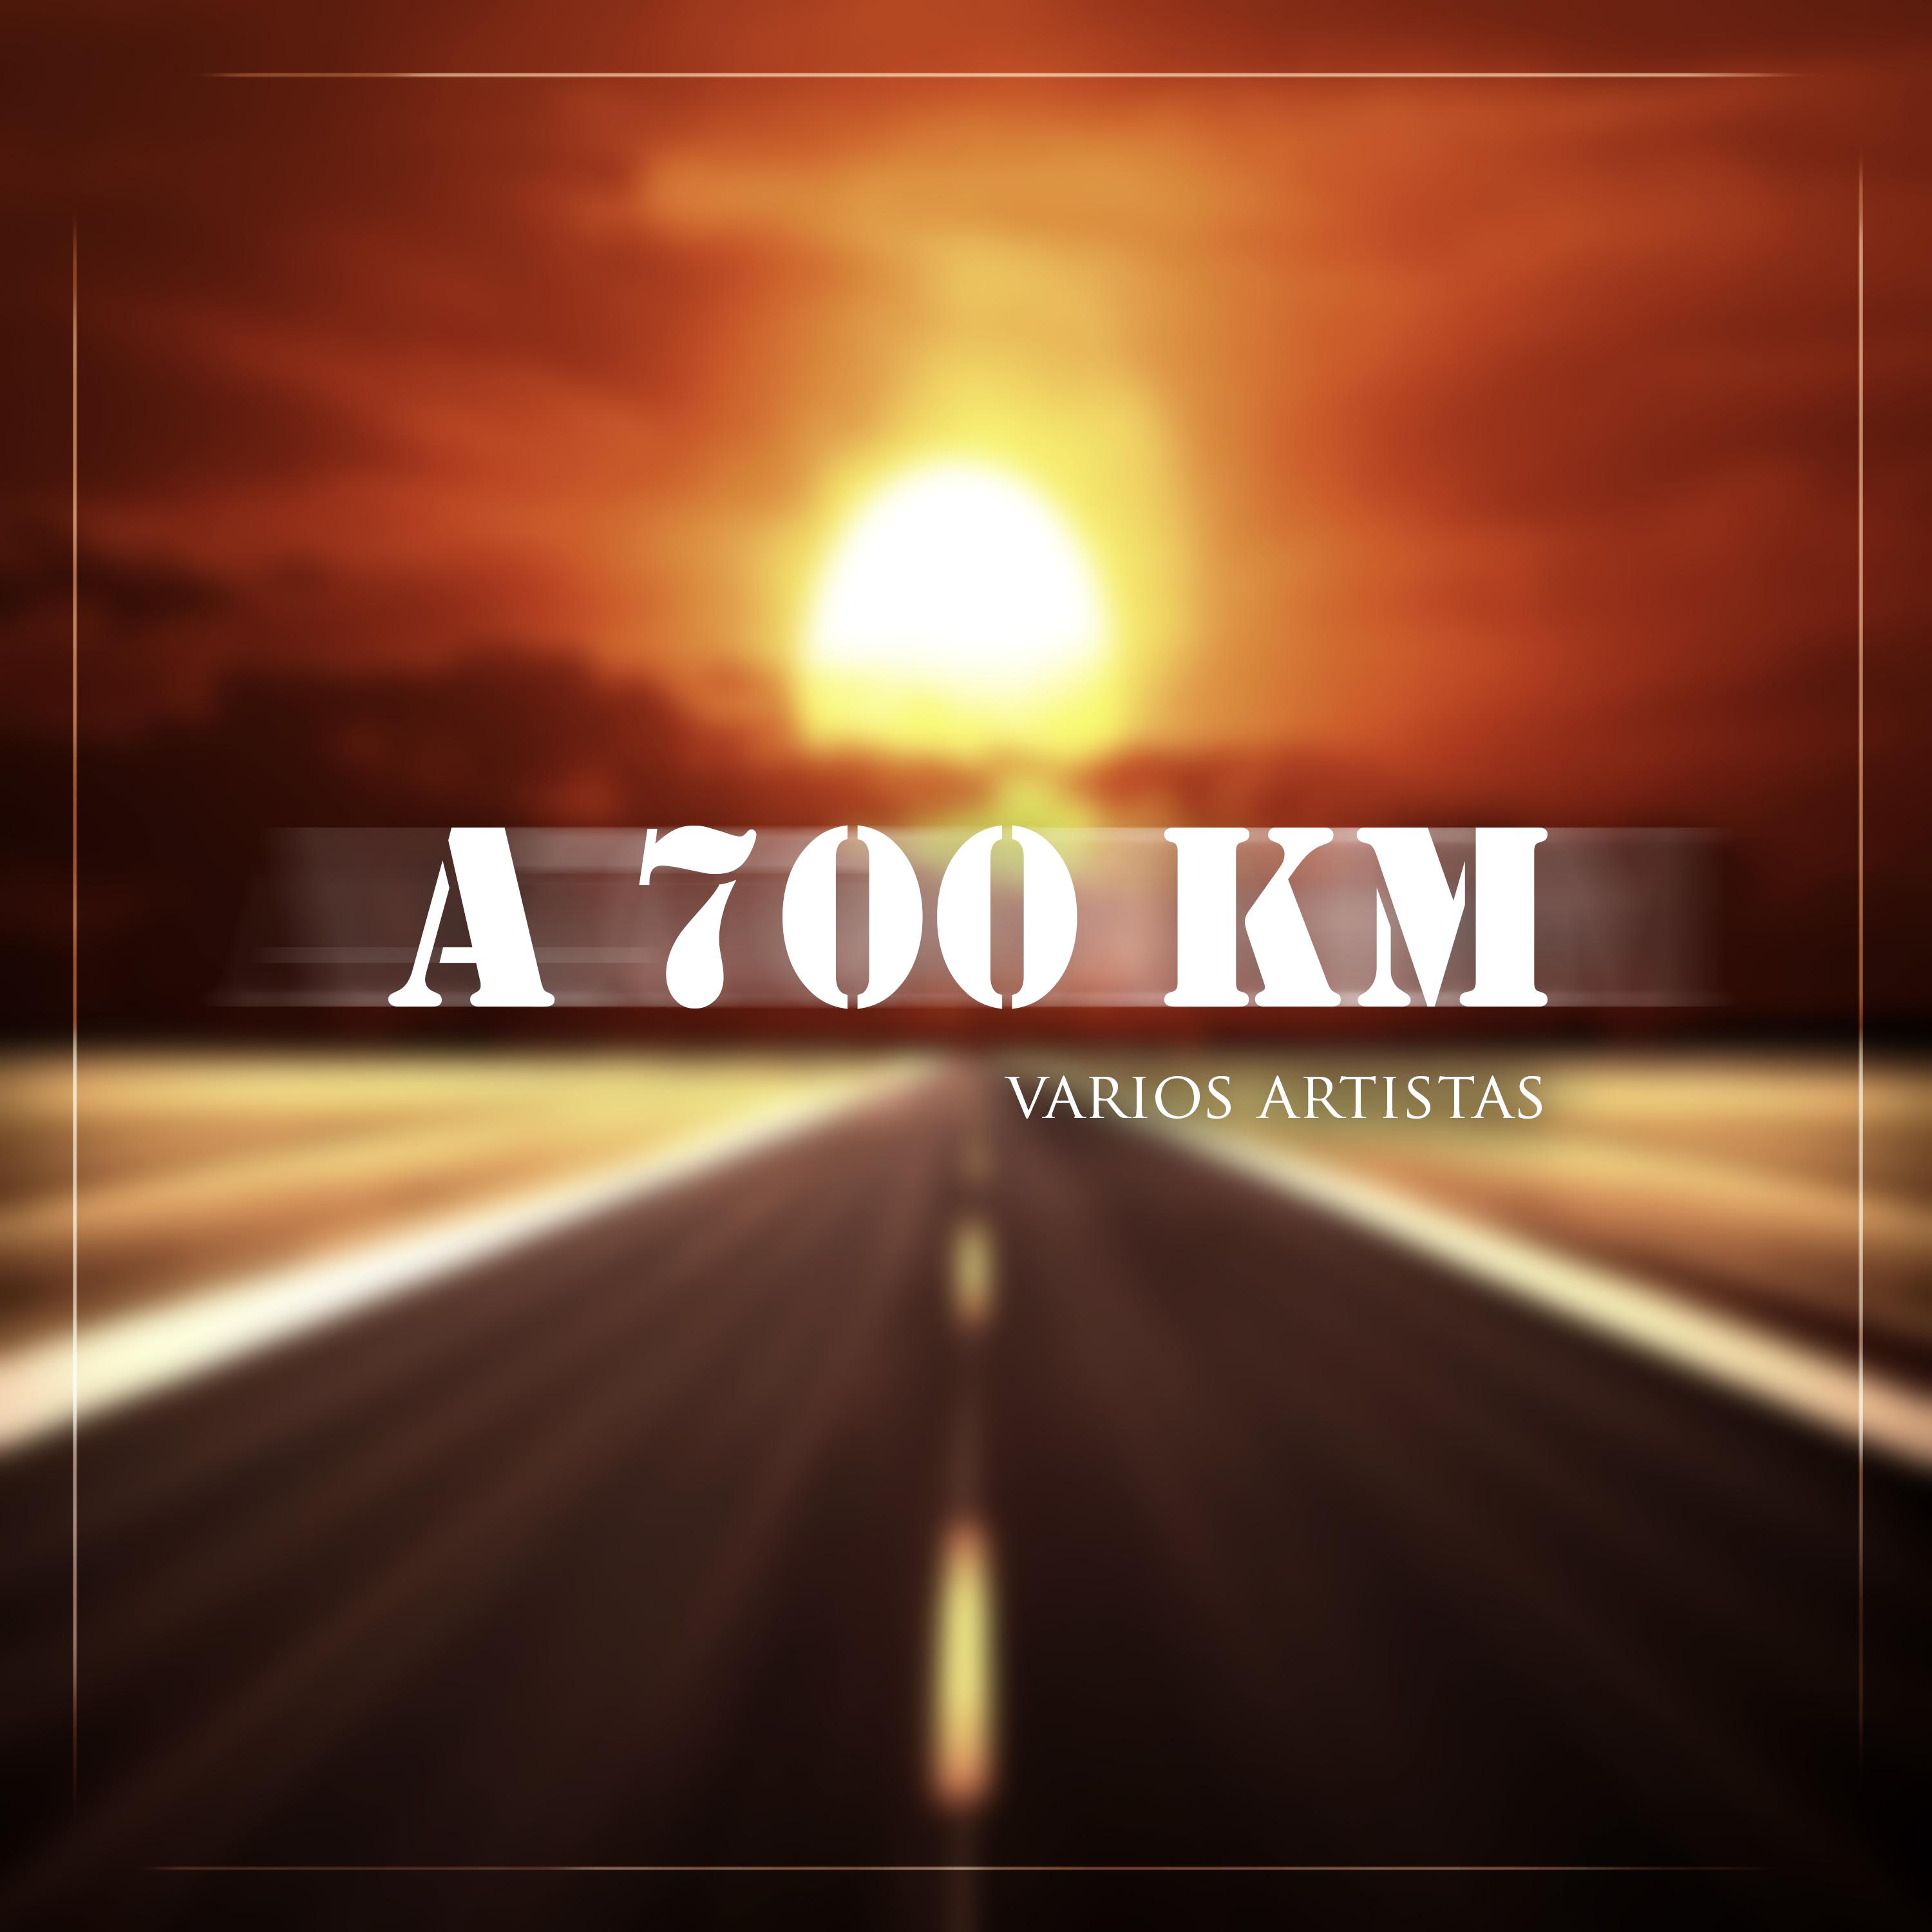 A 700 KM